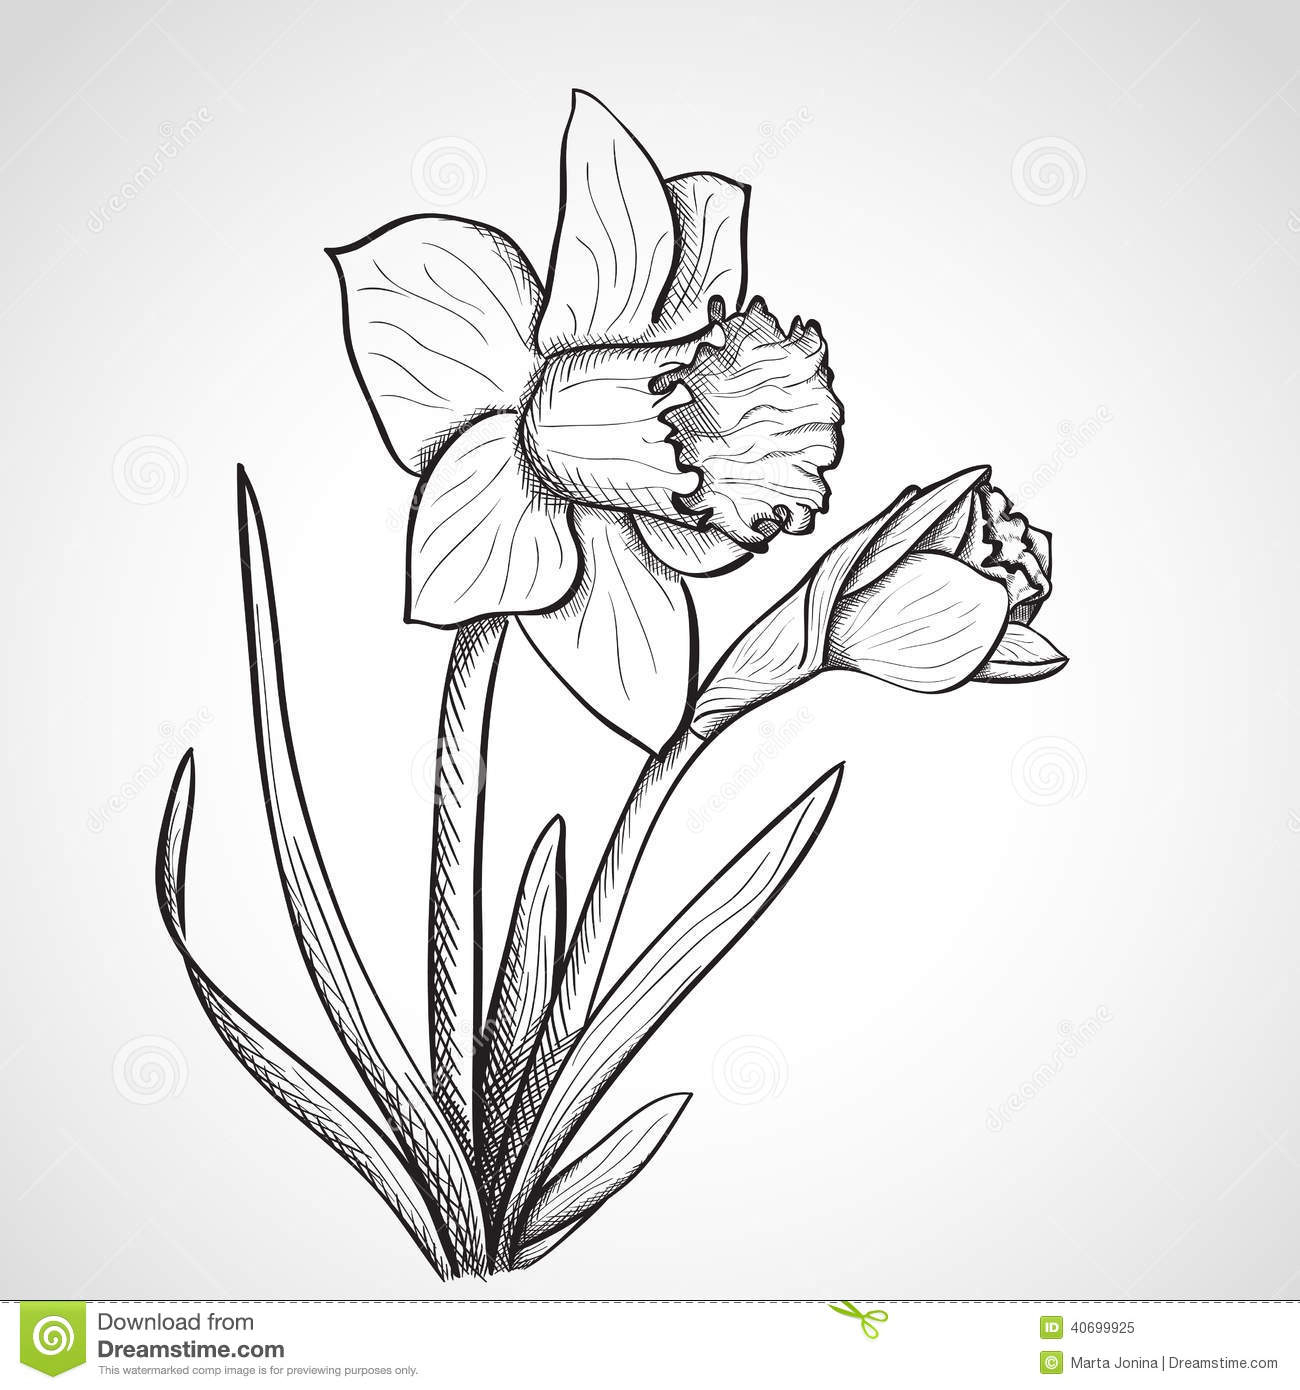 Sketch Daffodil Flower, Hand Drawn Stock Illustration - Image: 40699925 dedans Dessin Jonquille 